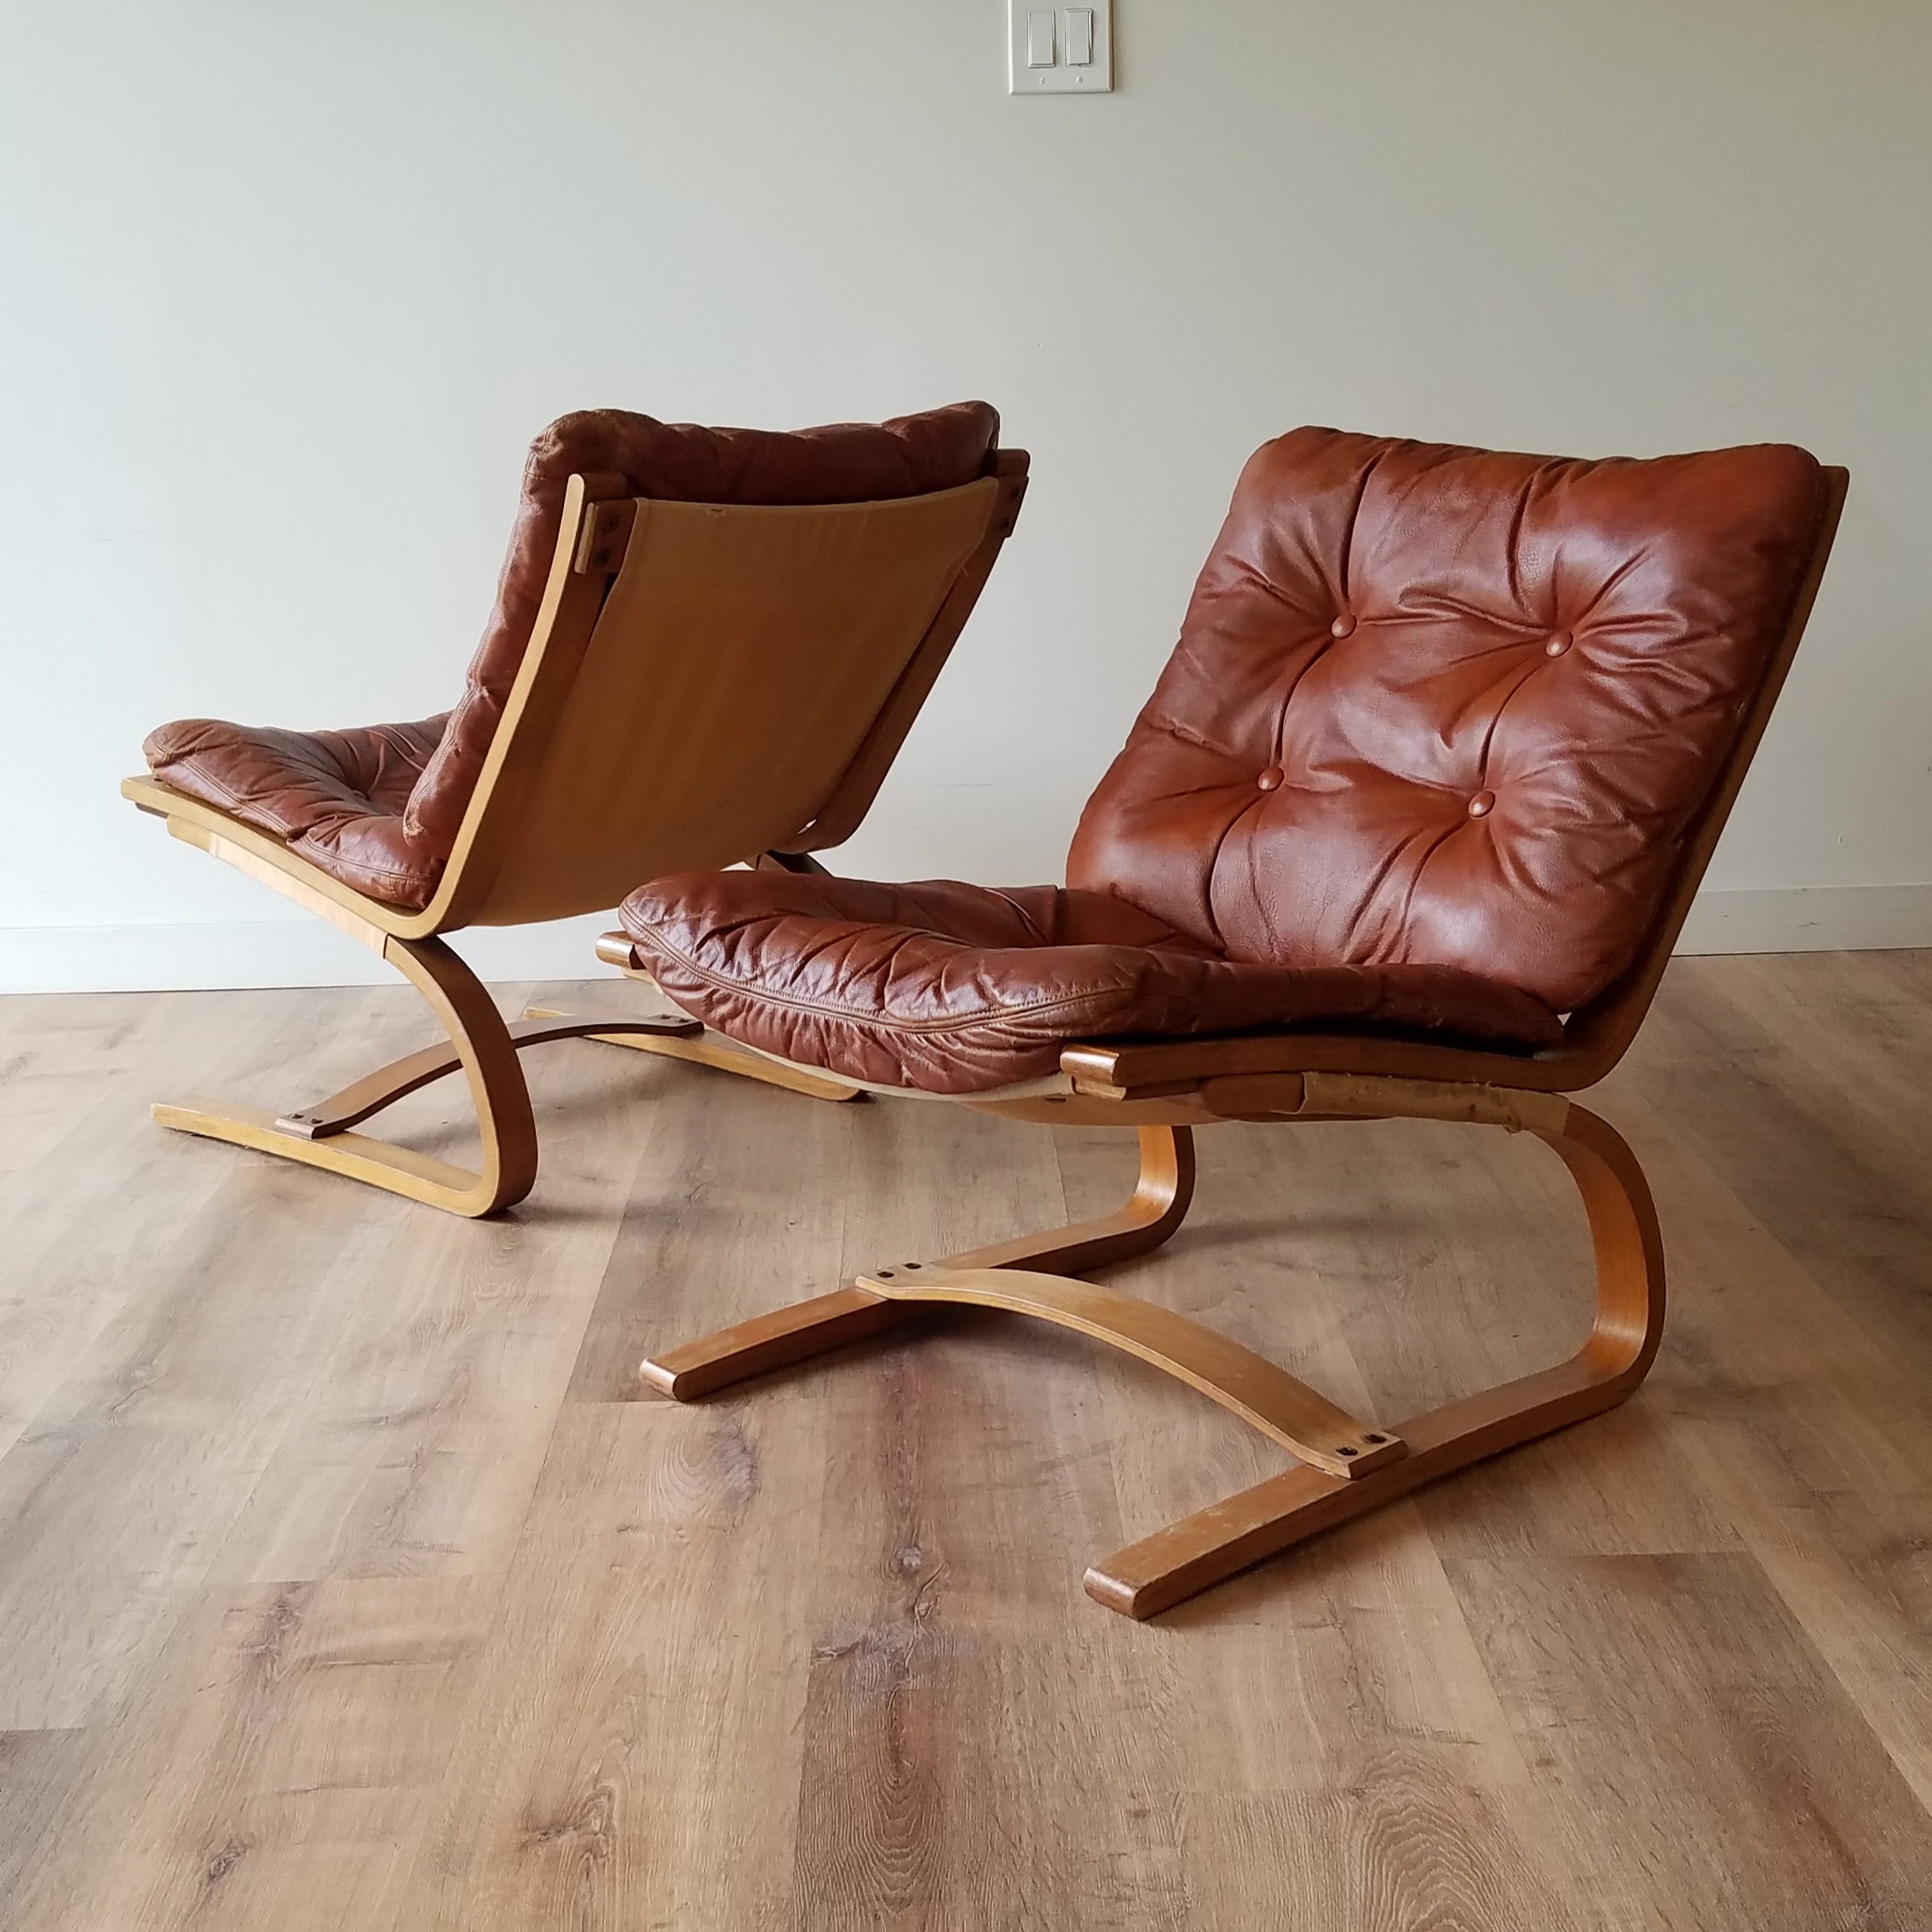 Solheim & Nordahl 'Kengu' Chairs